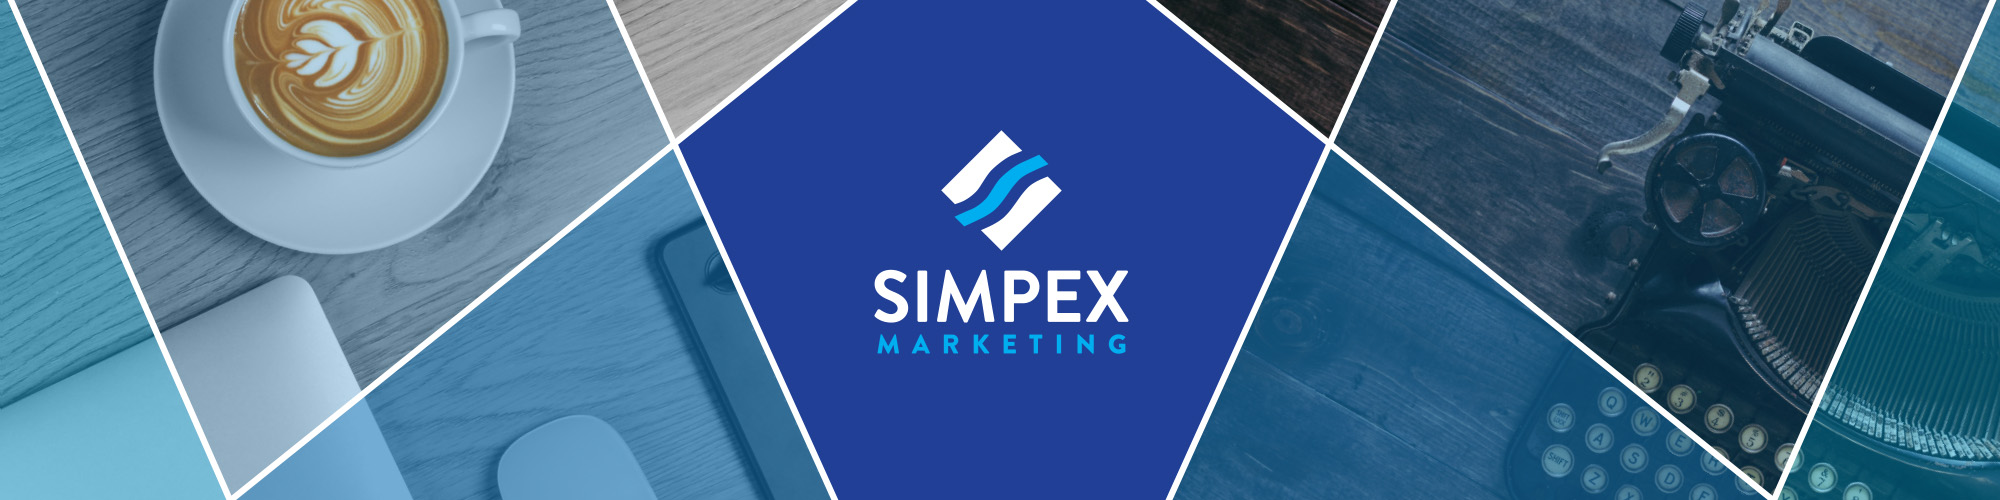 simpex banner